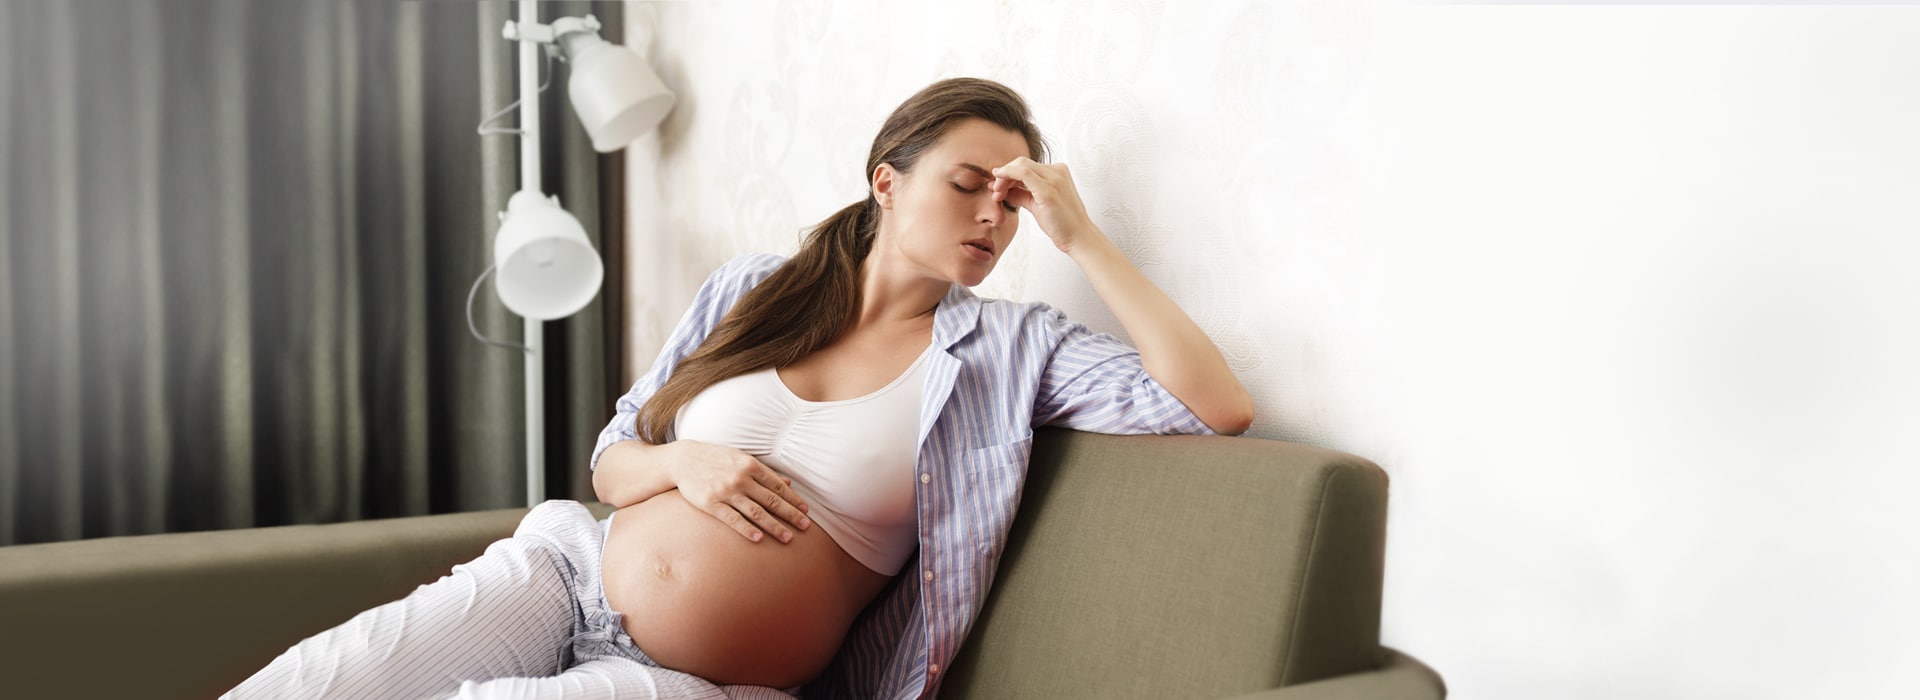 In Salute - dolori intercostali in gravidanza